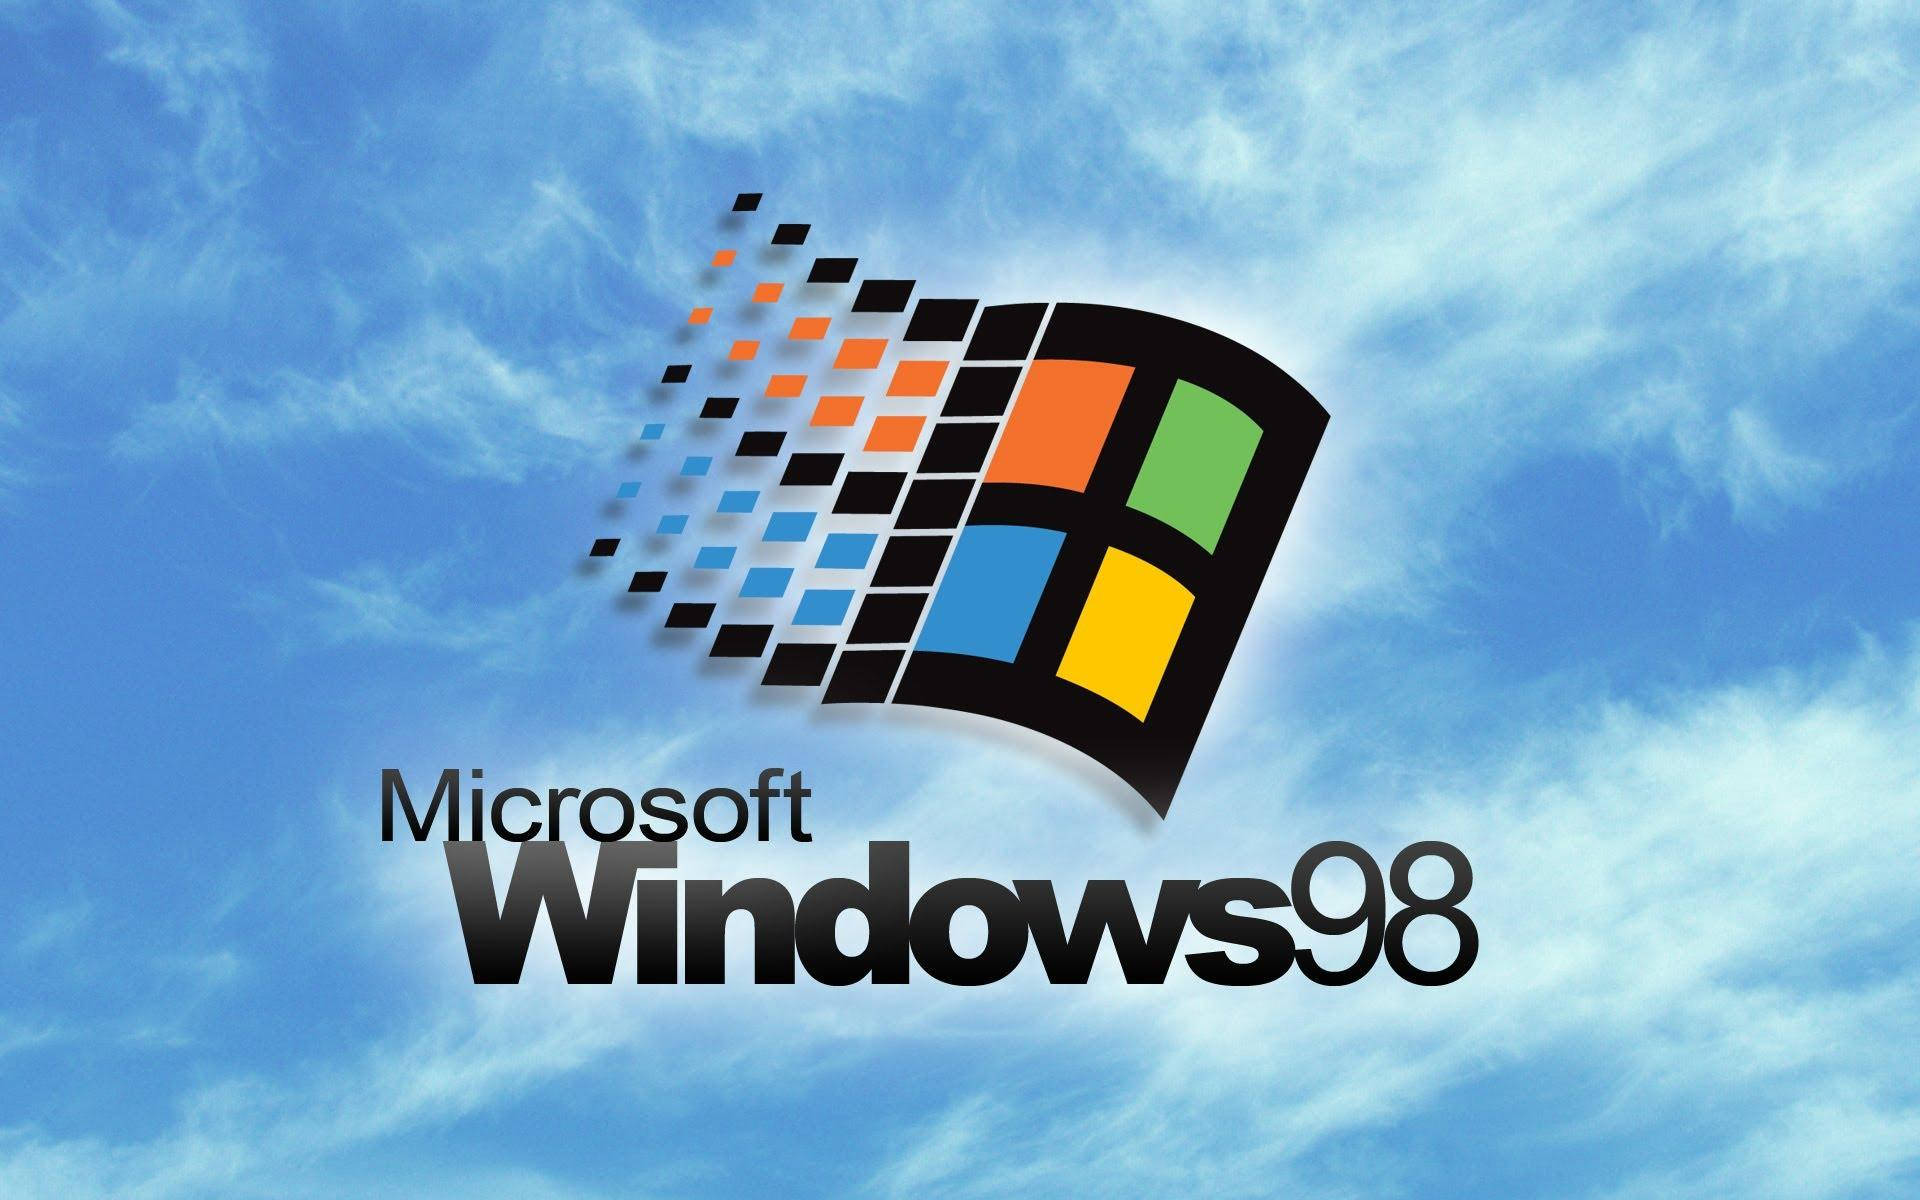 Microsoft Windows 98 Logo In The Sky Wallpaper